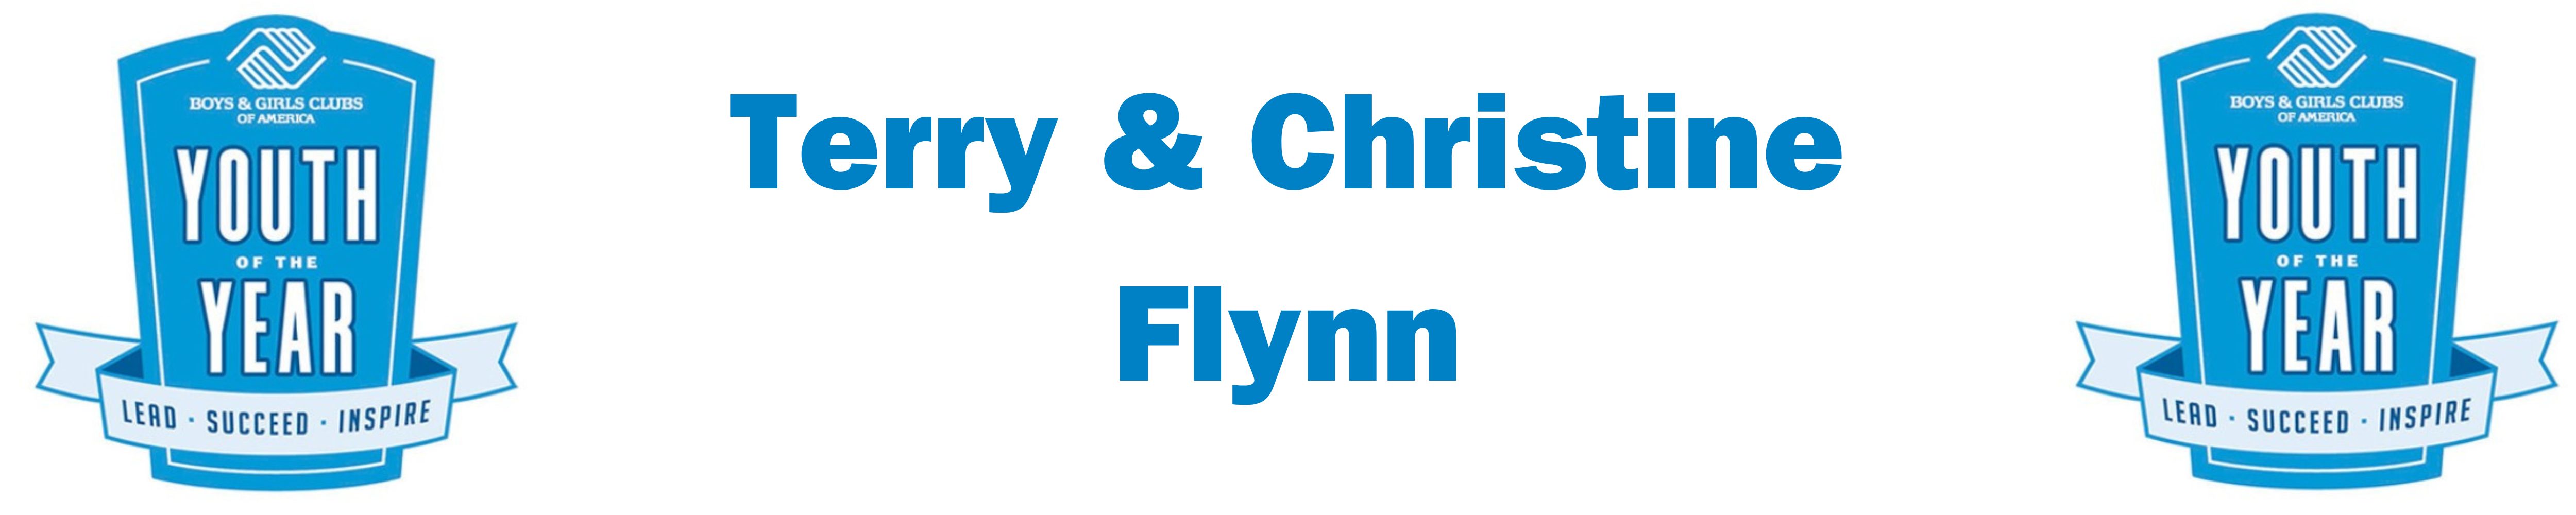 Terry & Christine Flynn